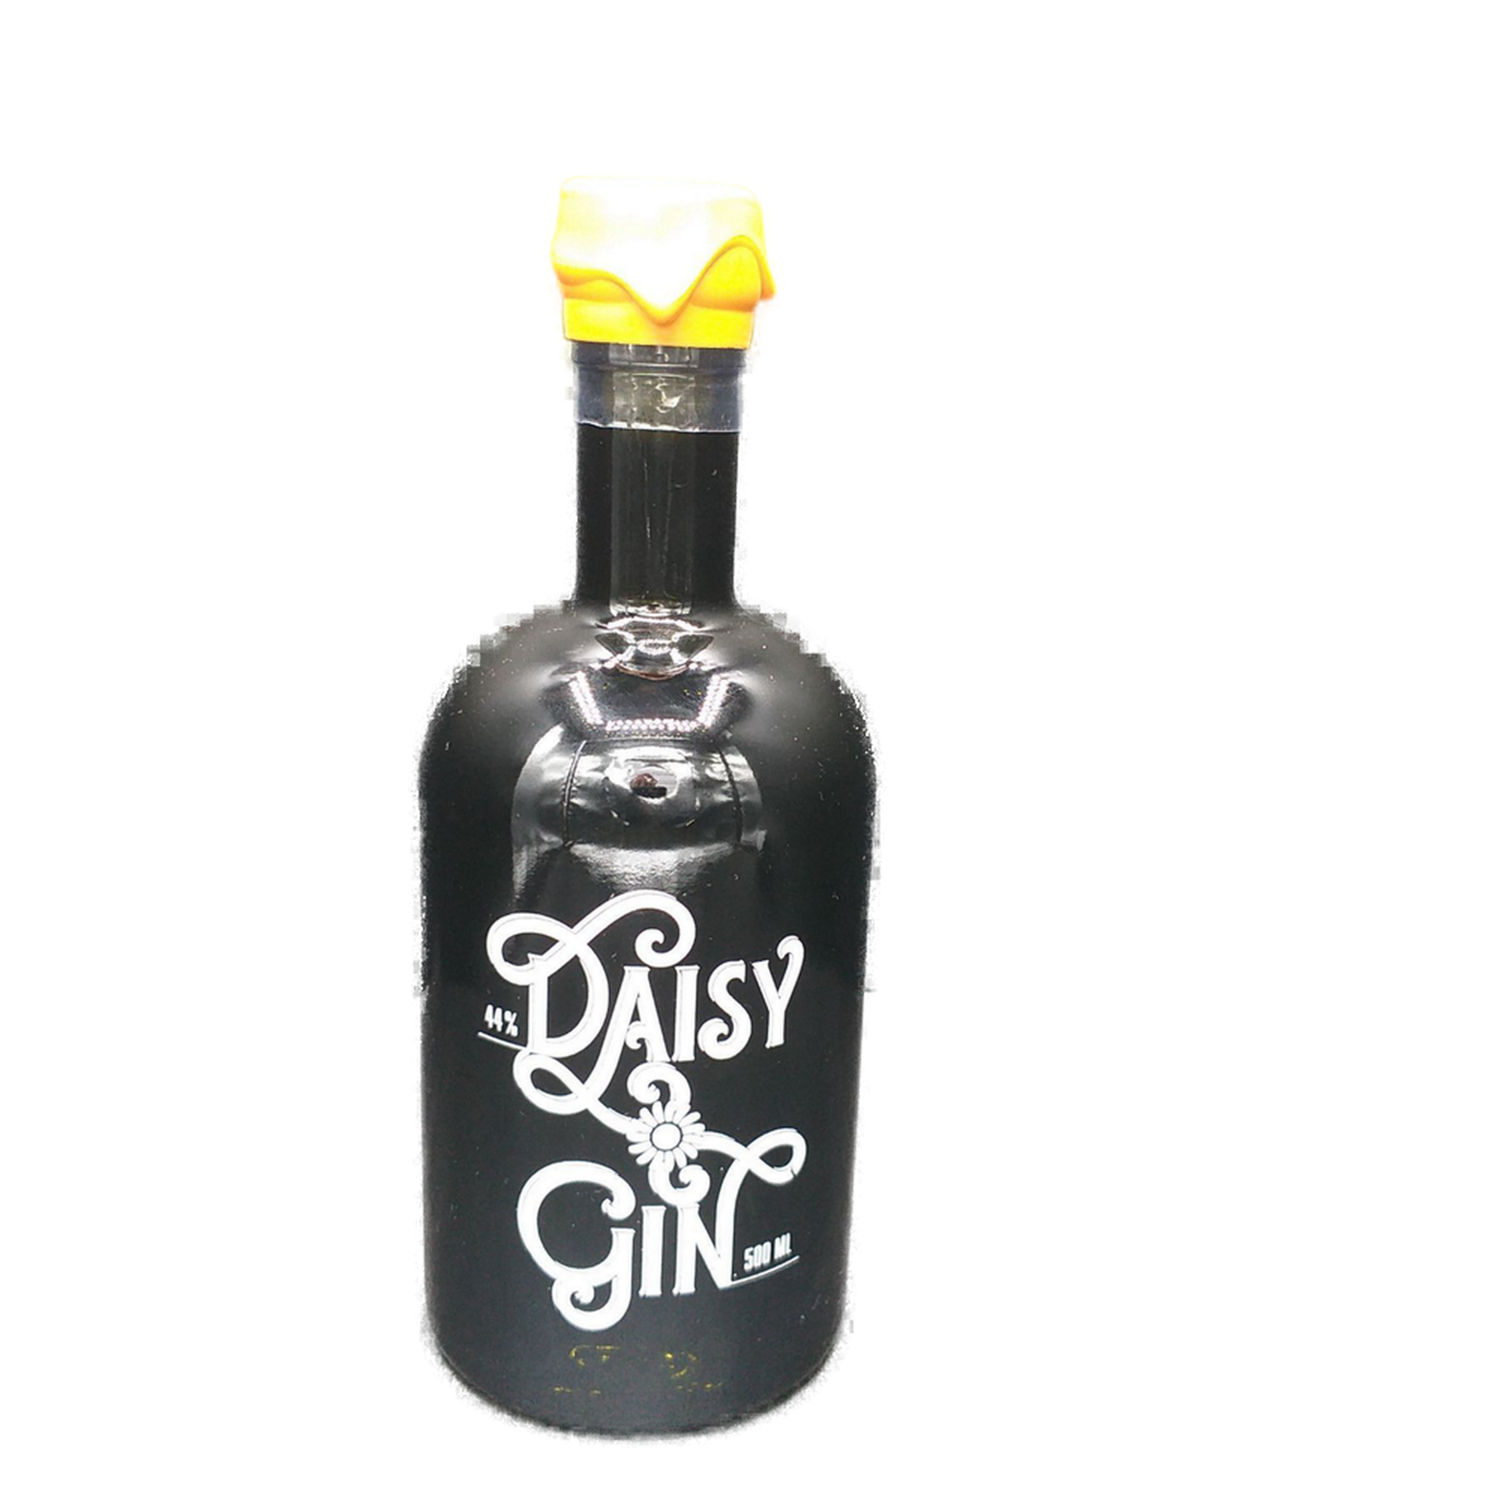 Daisy London Dry Gin Deutschland 44% VOL.